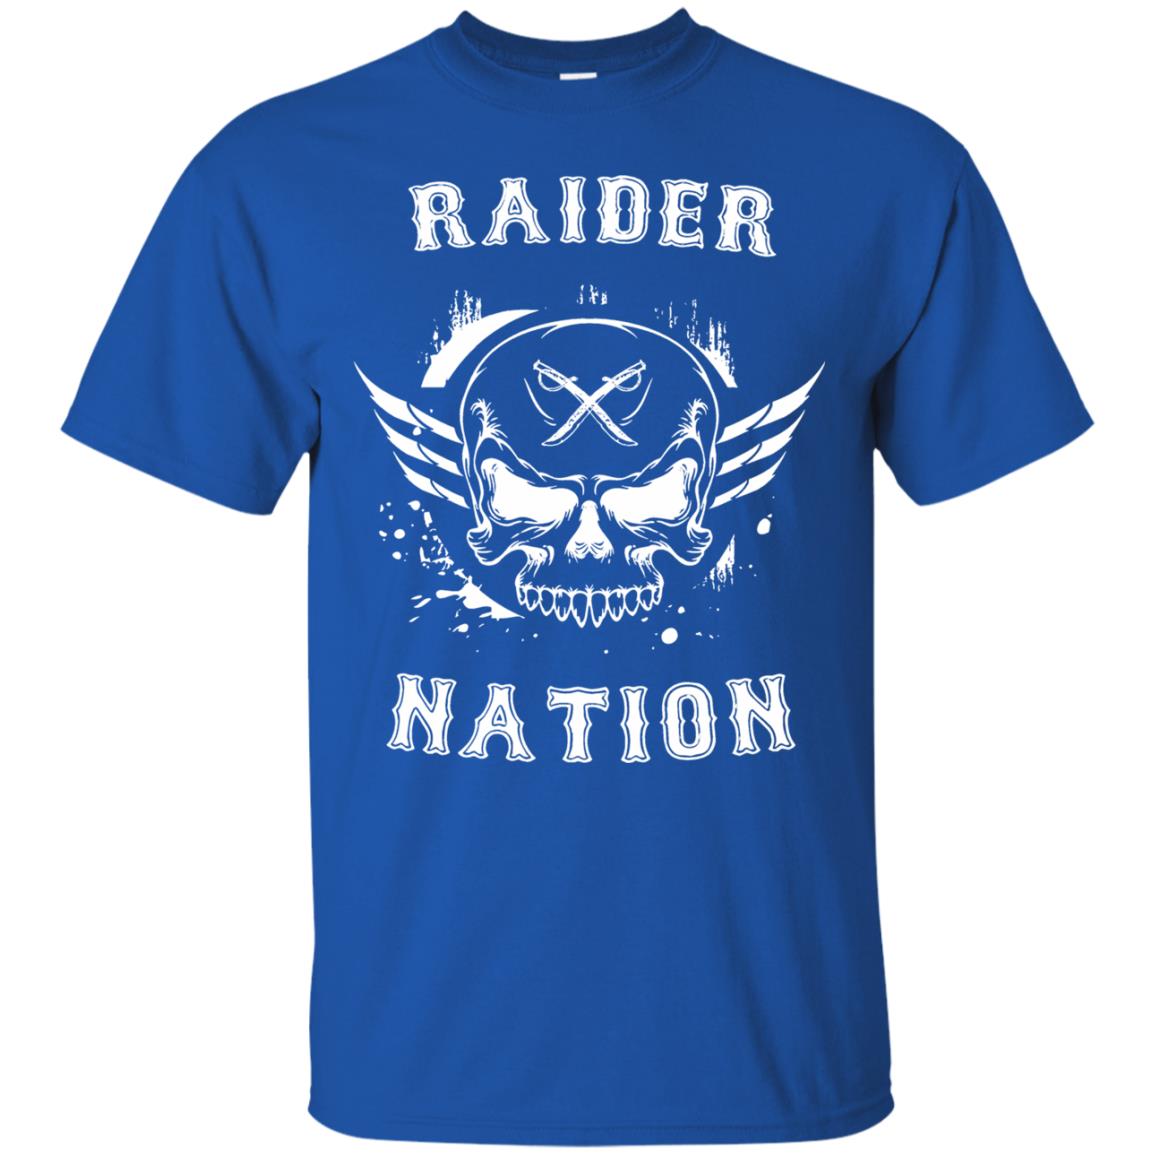 raider nations t shirt - royal blue